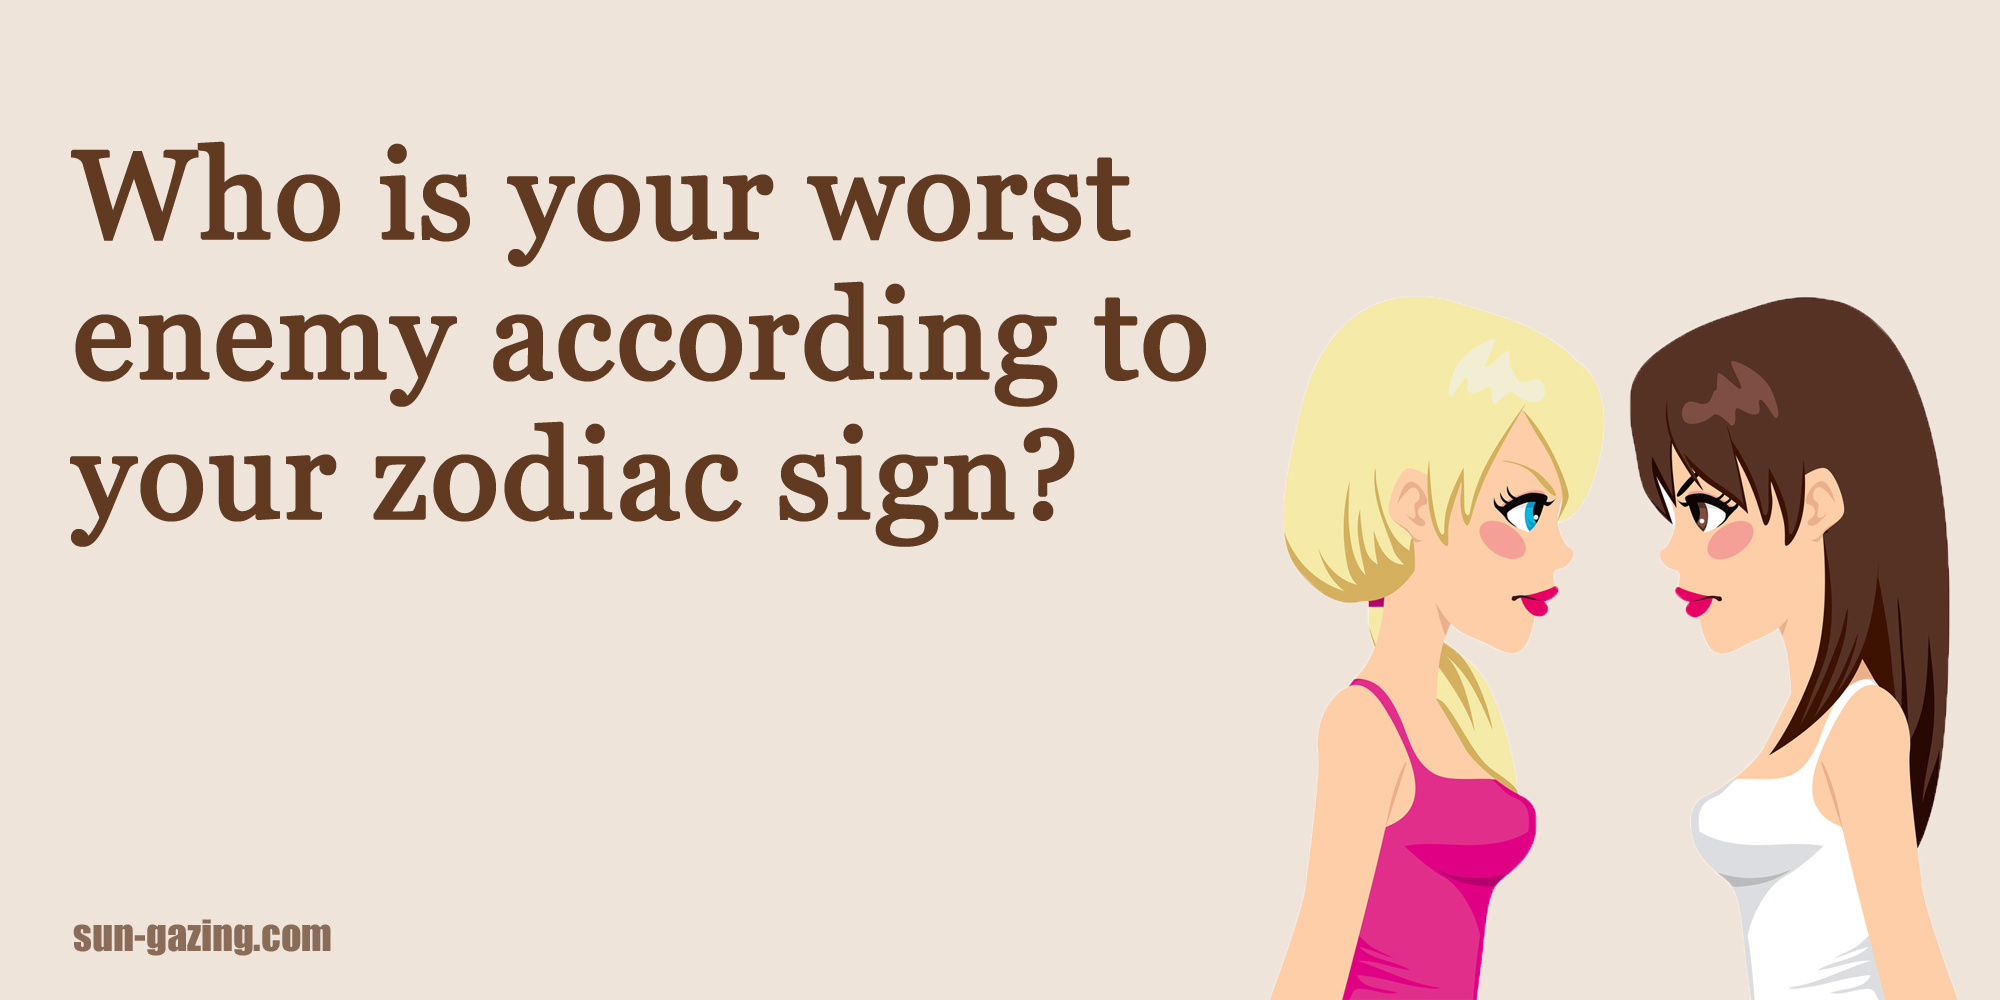 Zodiac sign worst Men Ranked